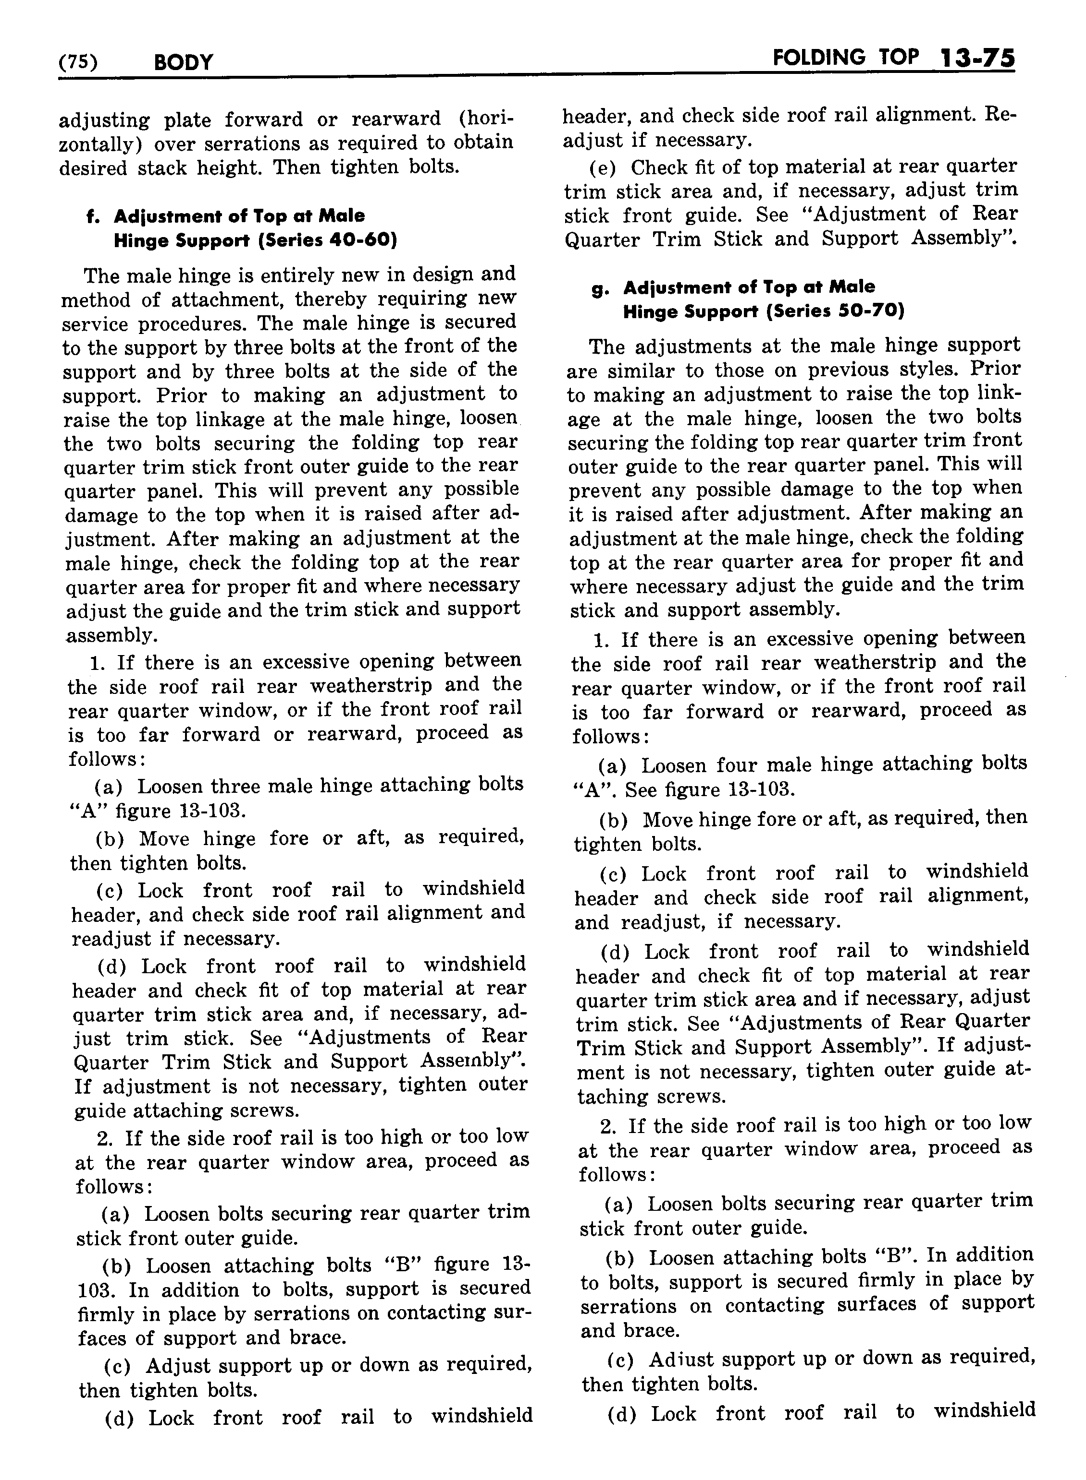 n_1957 Buick Body Service Manual-077-077.jpg